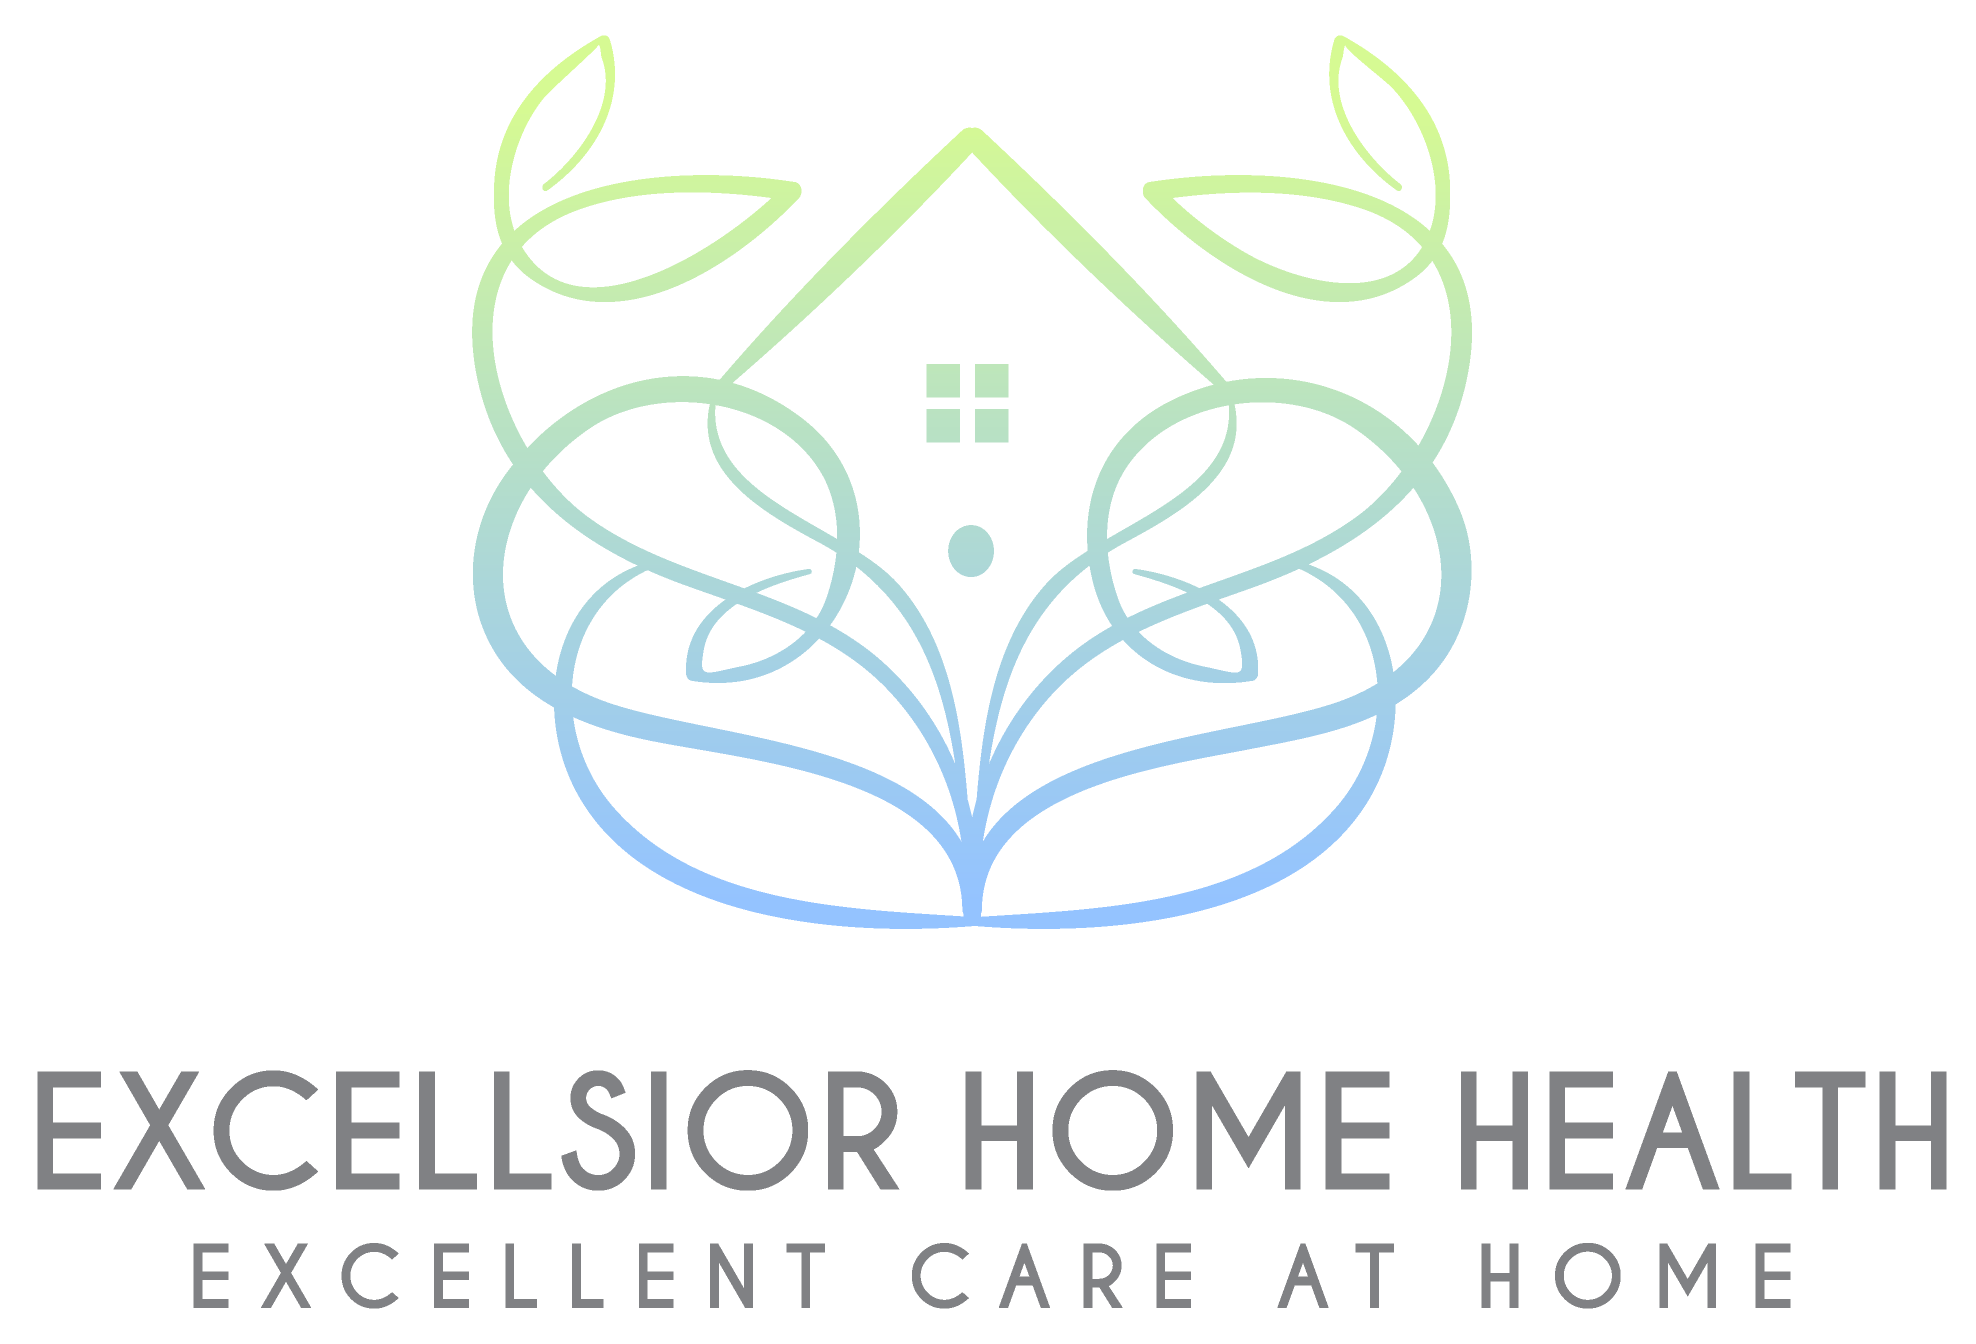 Excellsior Home Health